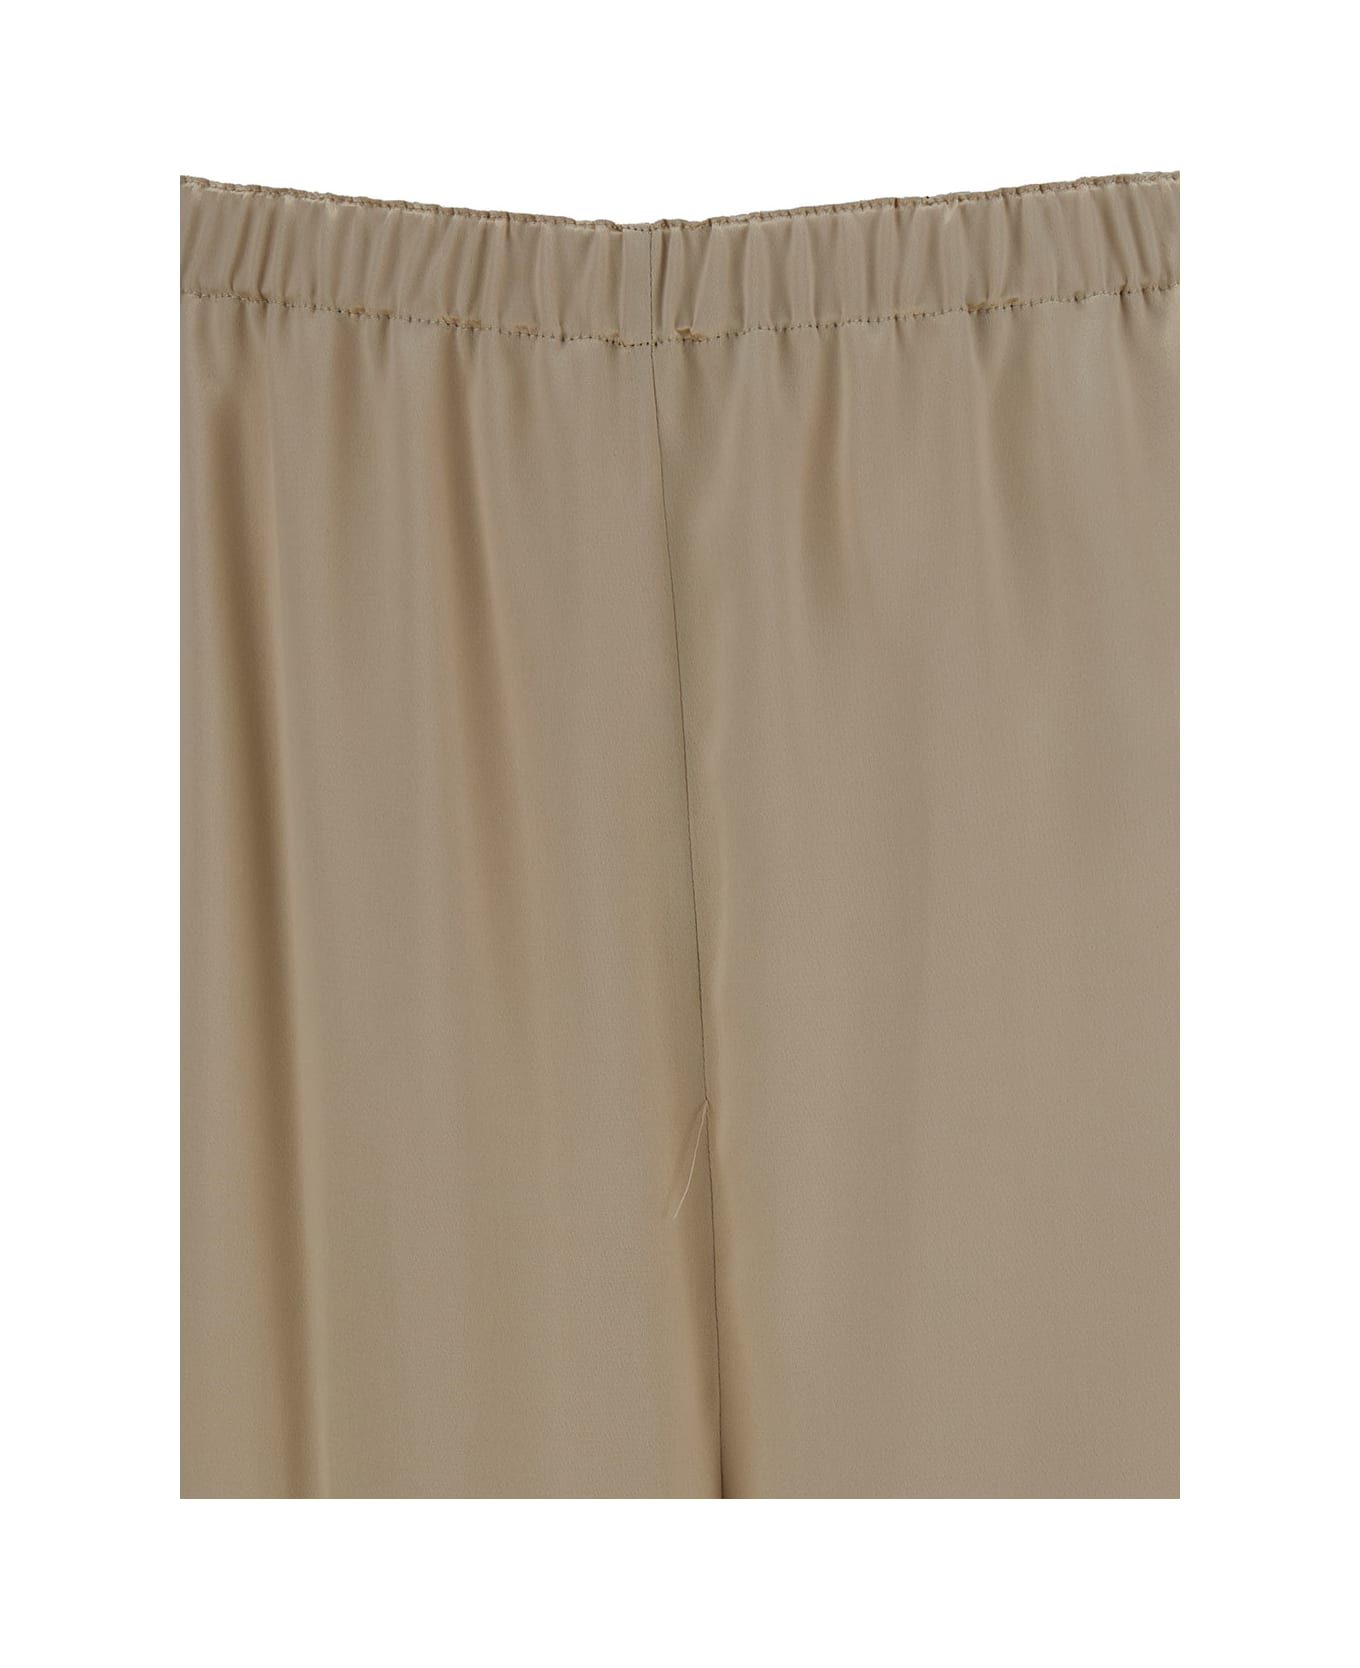 Ferragamo Beige Loose Pants With Elasticated Waist In Rayon Woman - Beige